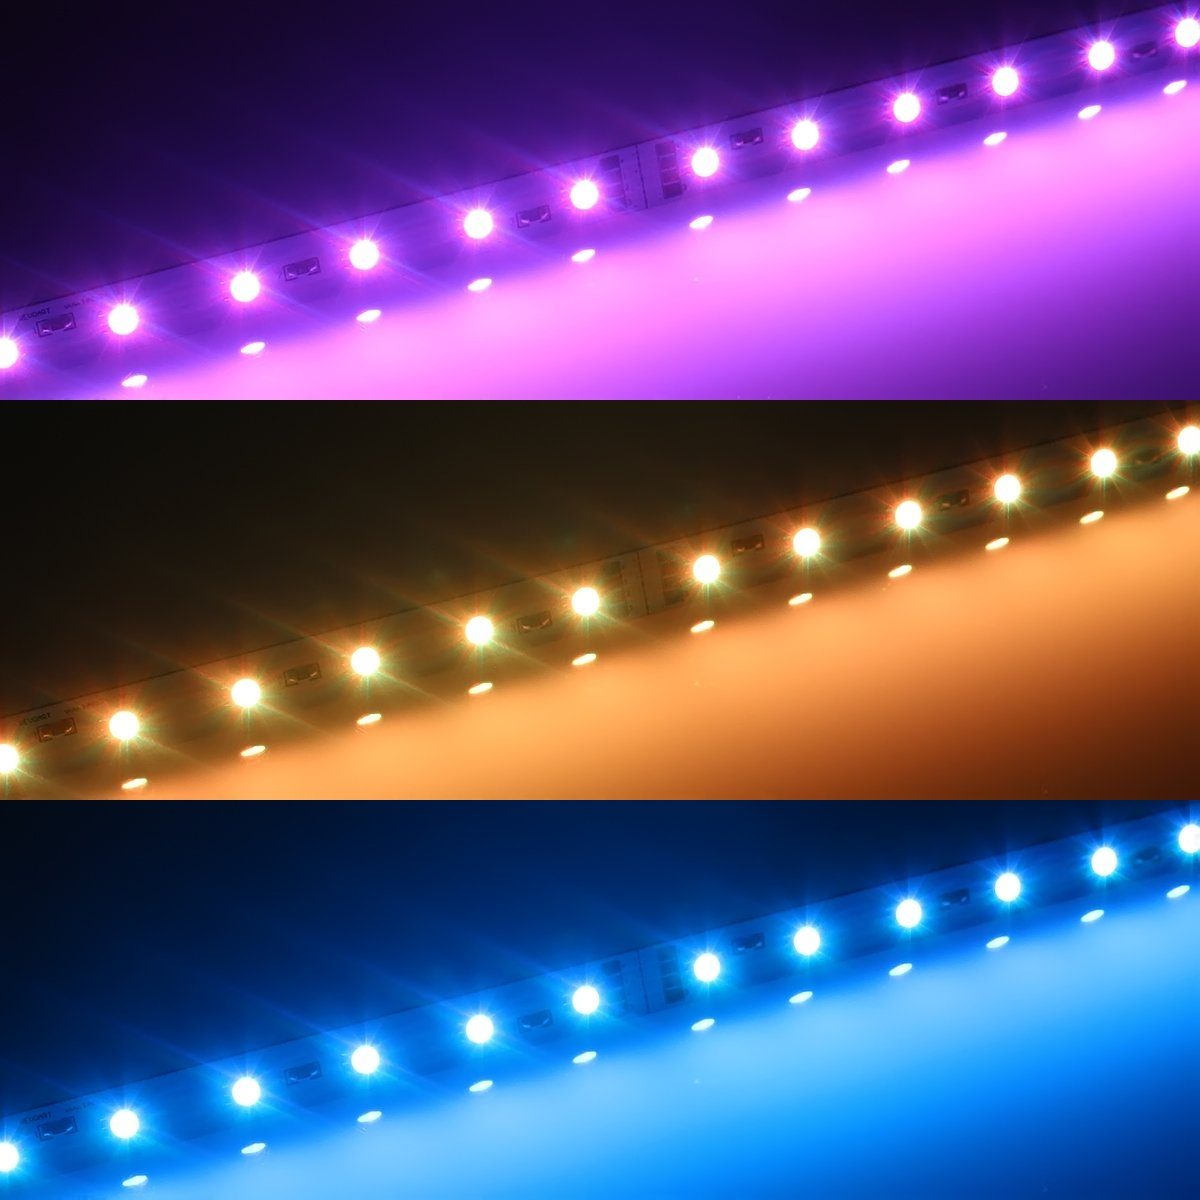 Hintergrundbeleuchtung, Ogeled Farbwechsel, RGB 25cm, LED LED-Lichterkette schmal, 24V Bunt, Farbwechsel, dimmbar, Modul Party-Lichterkette